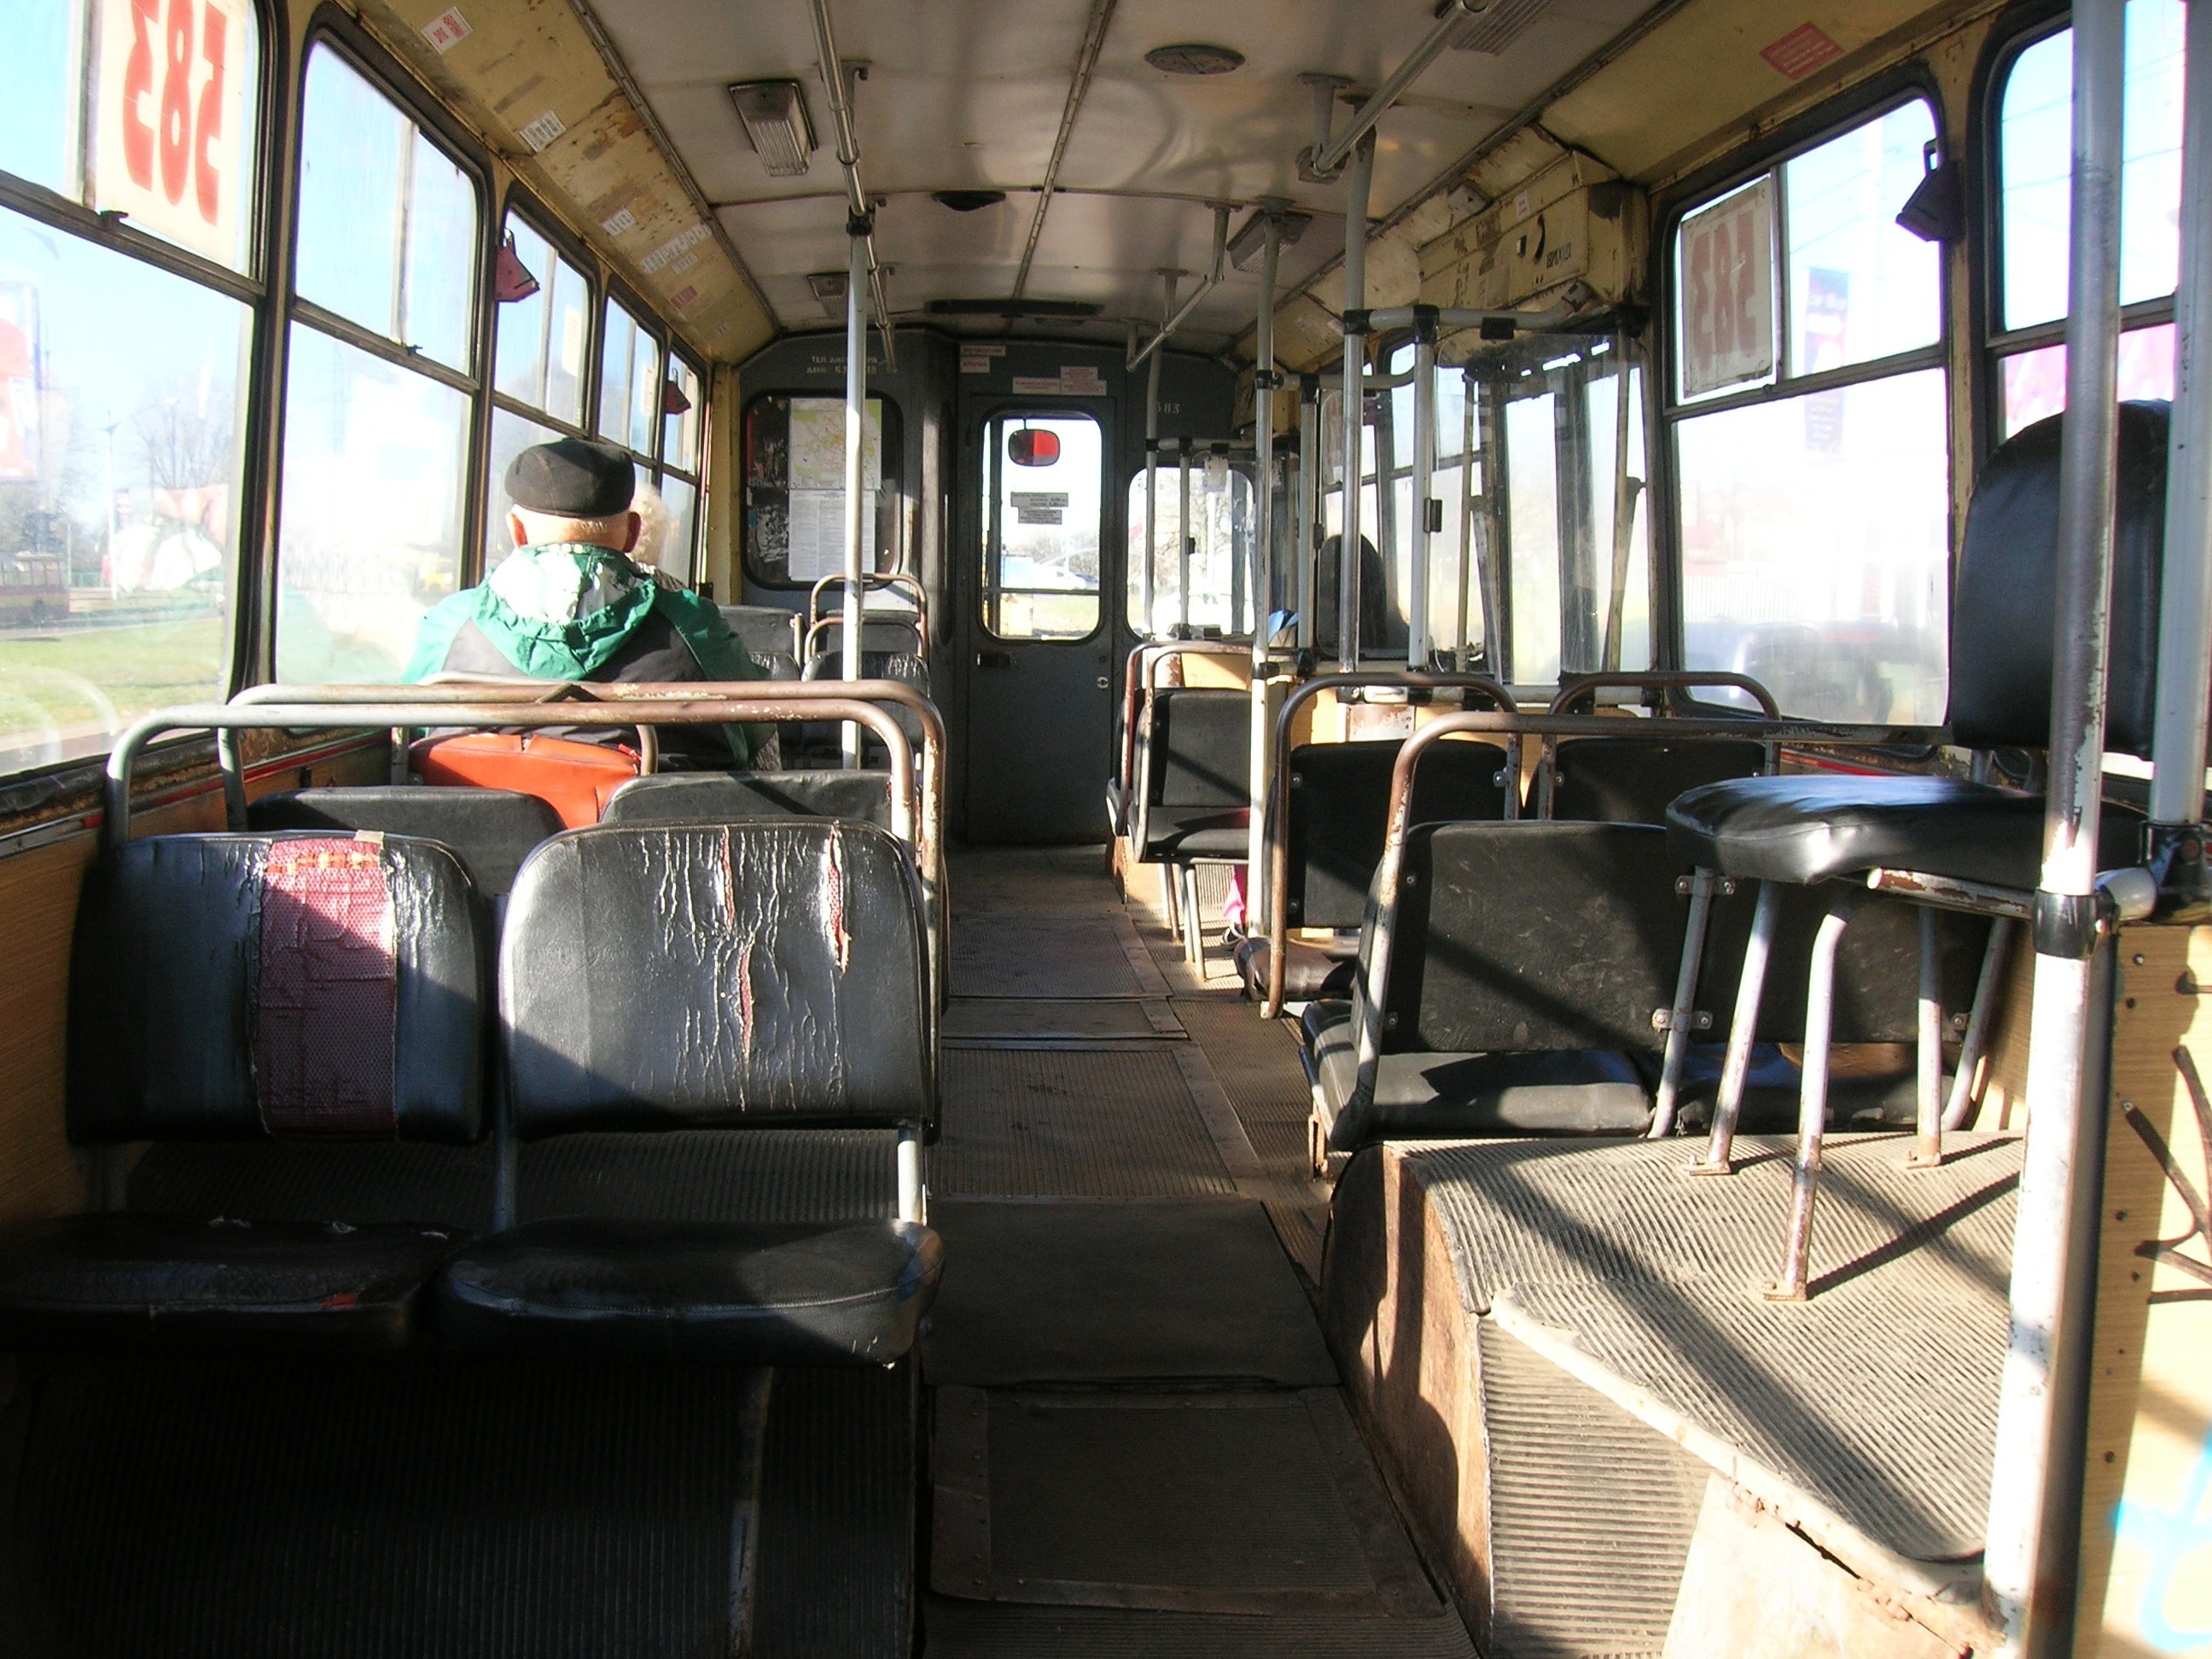 men wearing green coat inside the bus during daytime